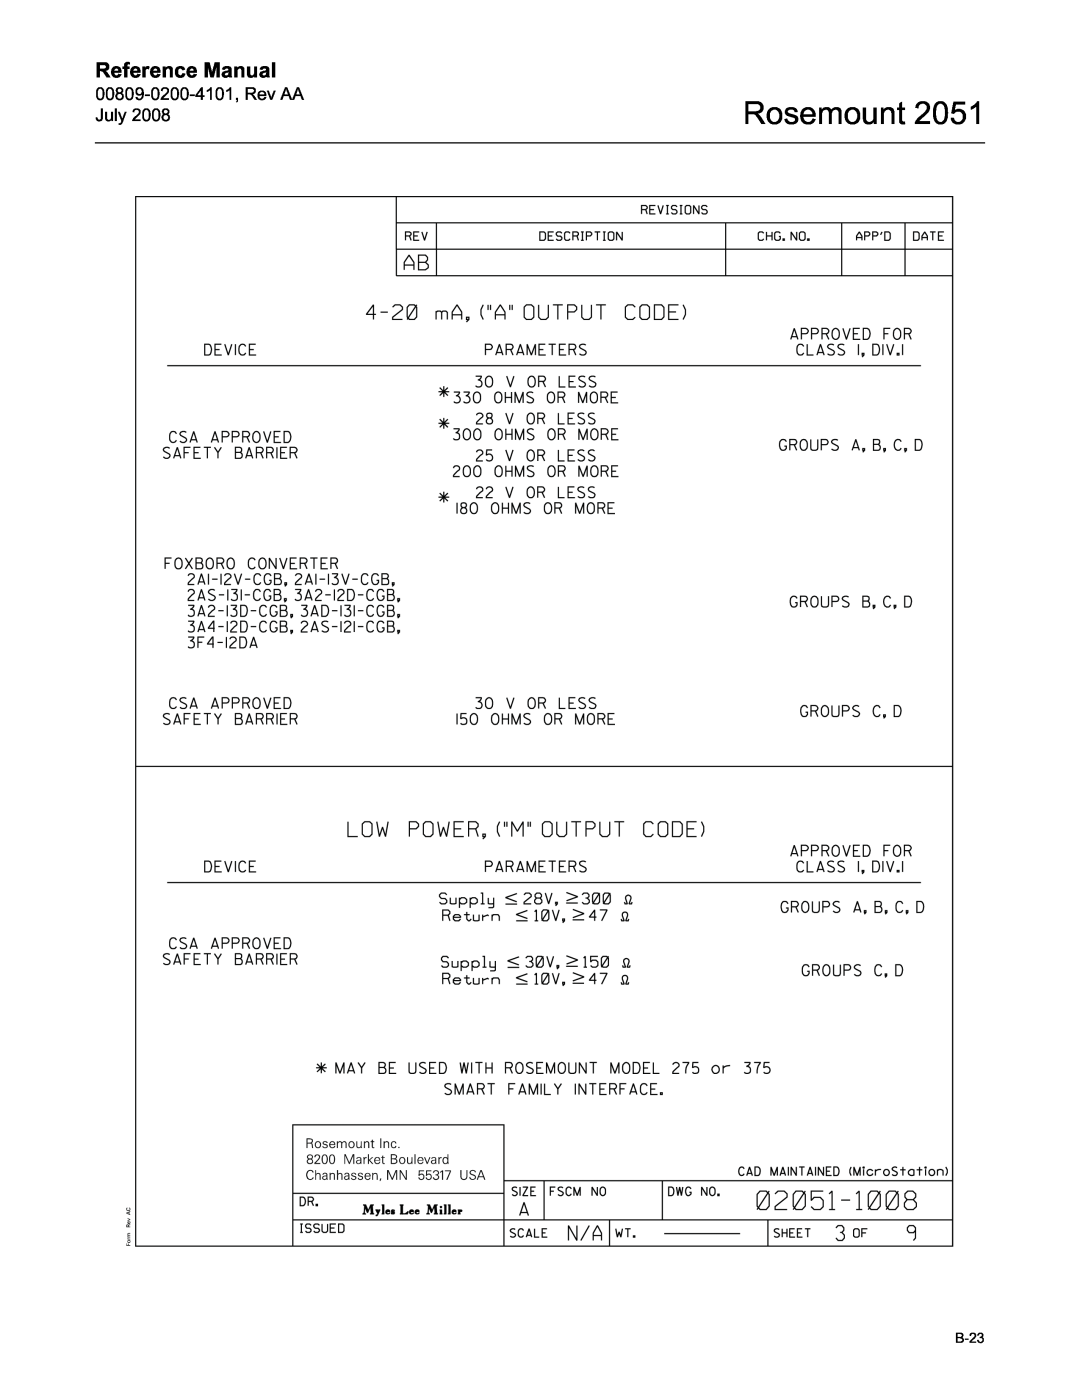 Emerson Process Management 2051 manual Rosemount, Reference Manual, B-23 